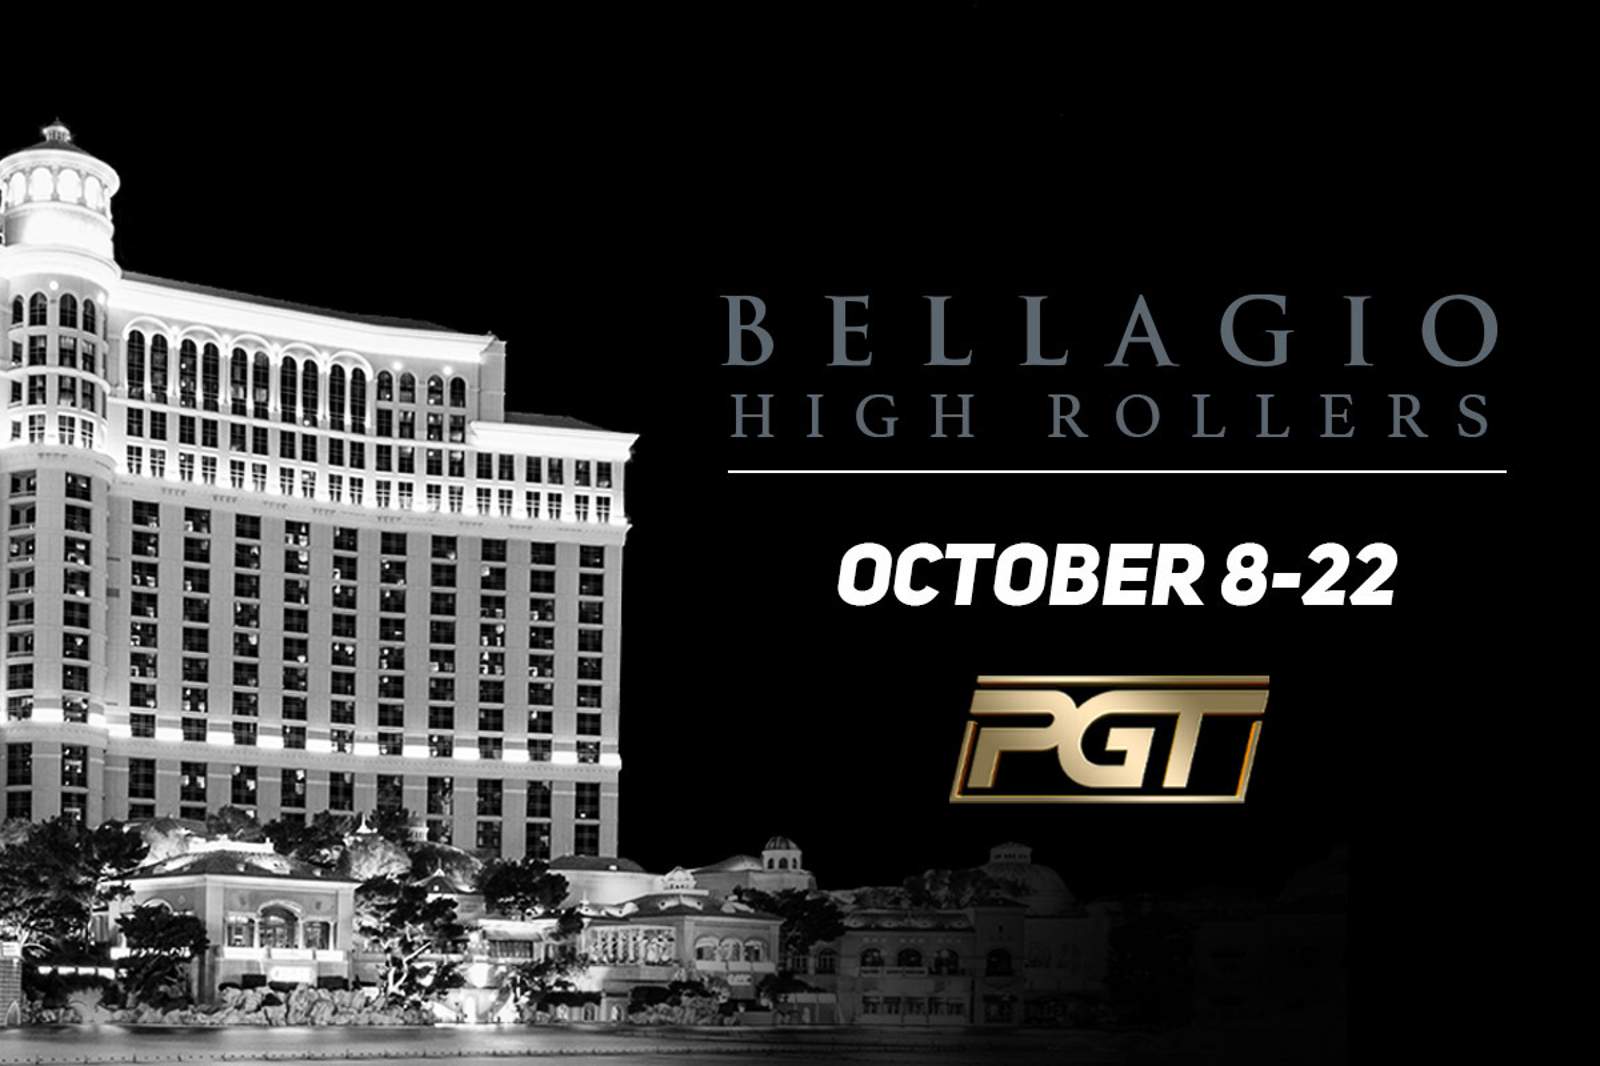 Bellagio High Rollers: October 8-22